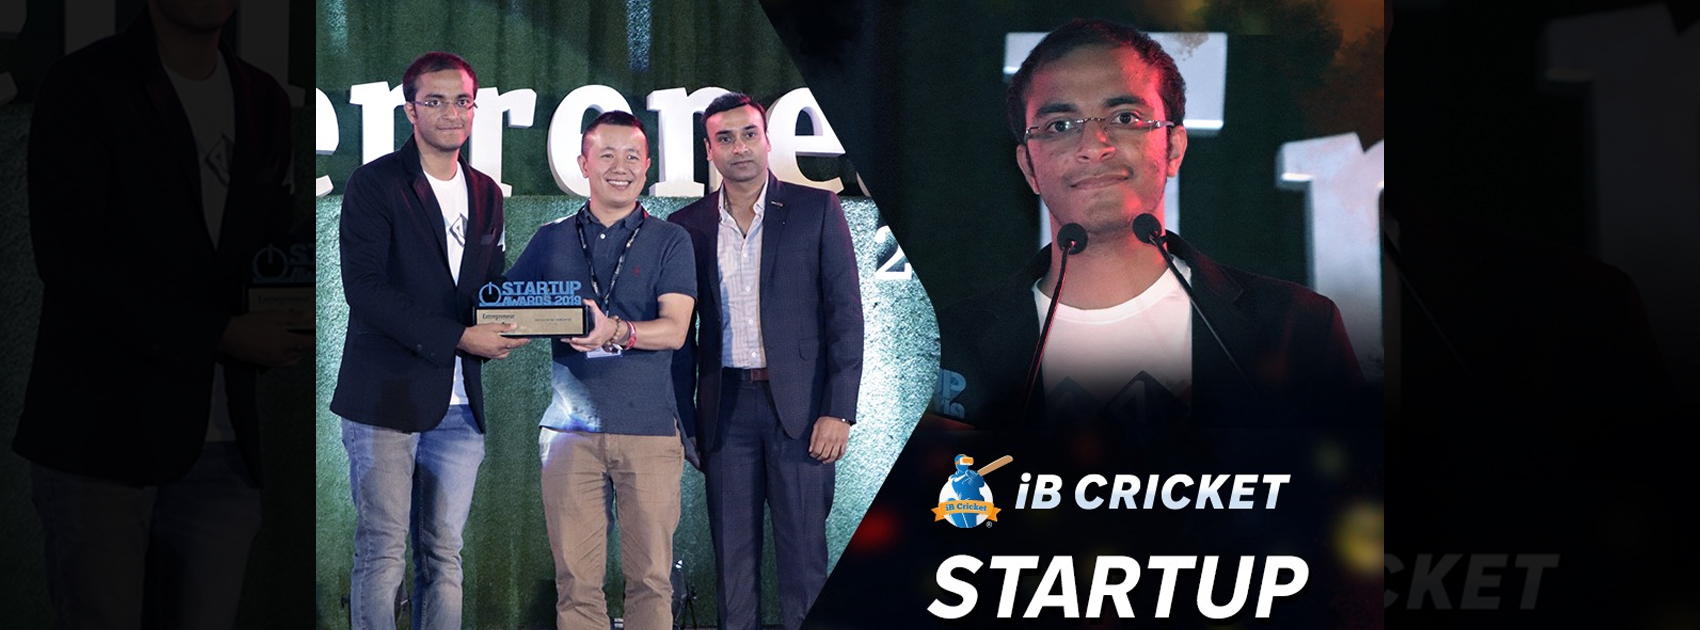 iB Cricket Bags Startup Of The Year Award,Entrepreneur India 2019,Startup Stories,iB Cricket,iB Cricket Startup Award,iB Cricket Immersive VR Game,World’s First Virtual Reality Cricket,iB Cricket Super Over League,iB Cricket Awards